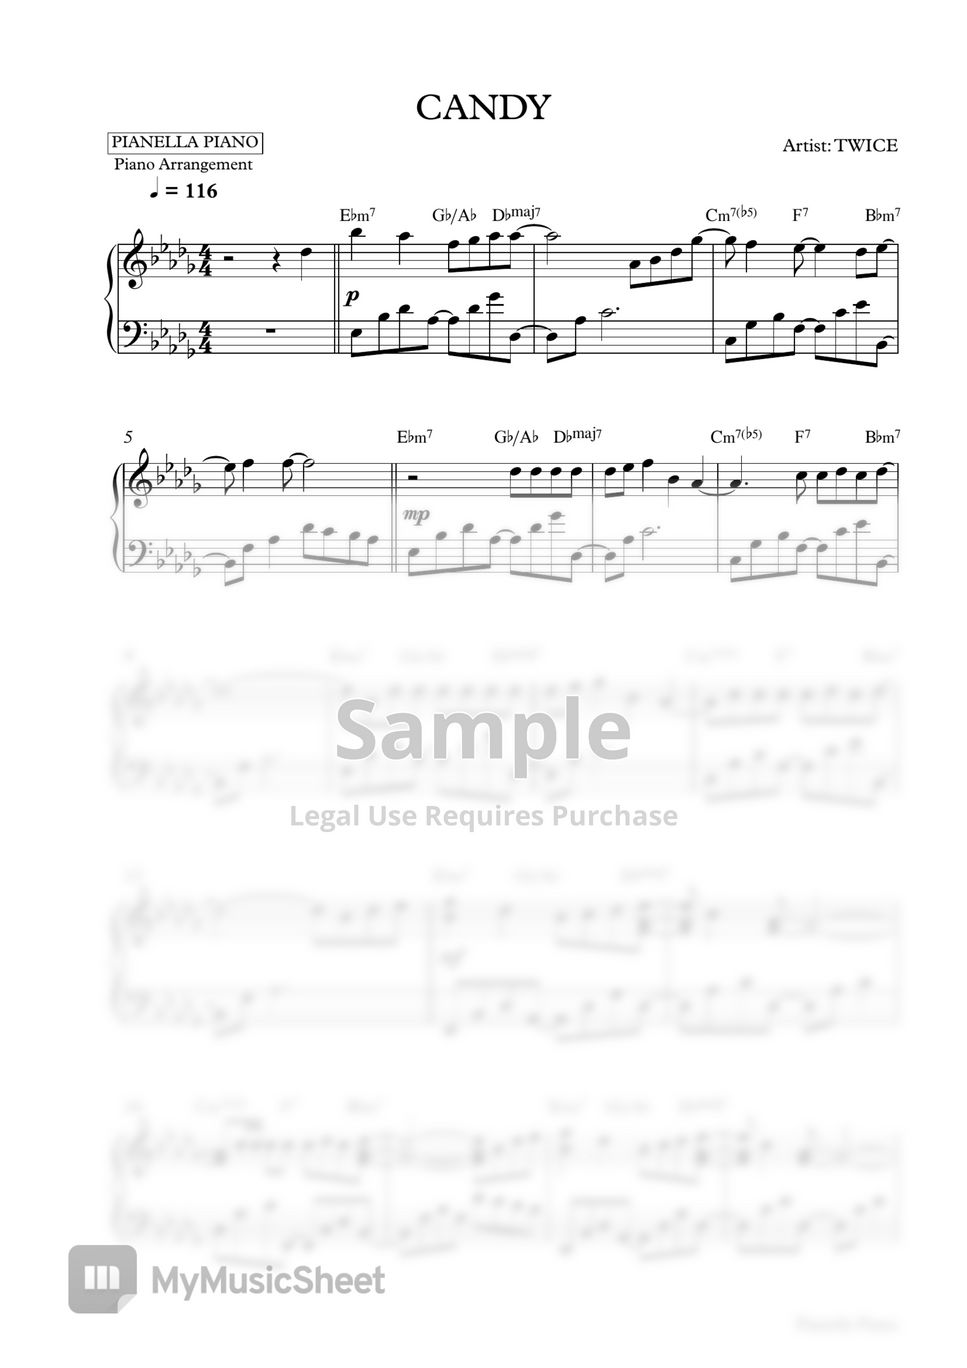 TWICE - CANDY (Piano Sheet) by Pianella Piano